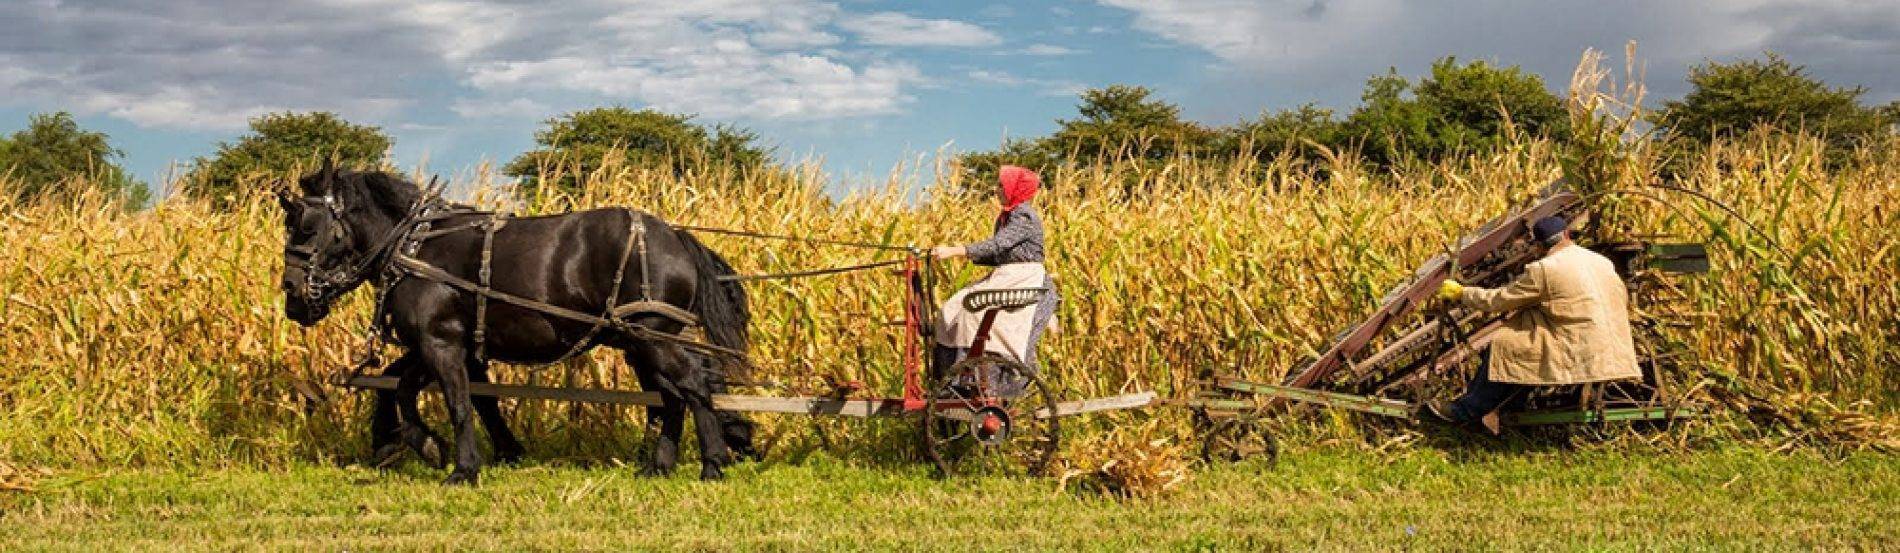 farmers and horses harvest corn crop